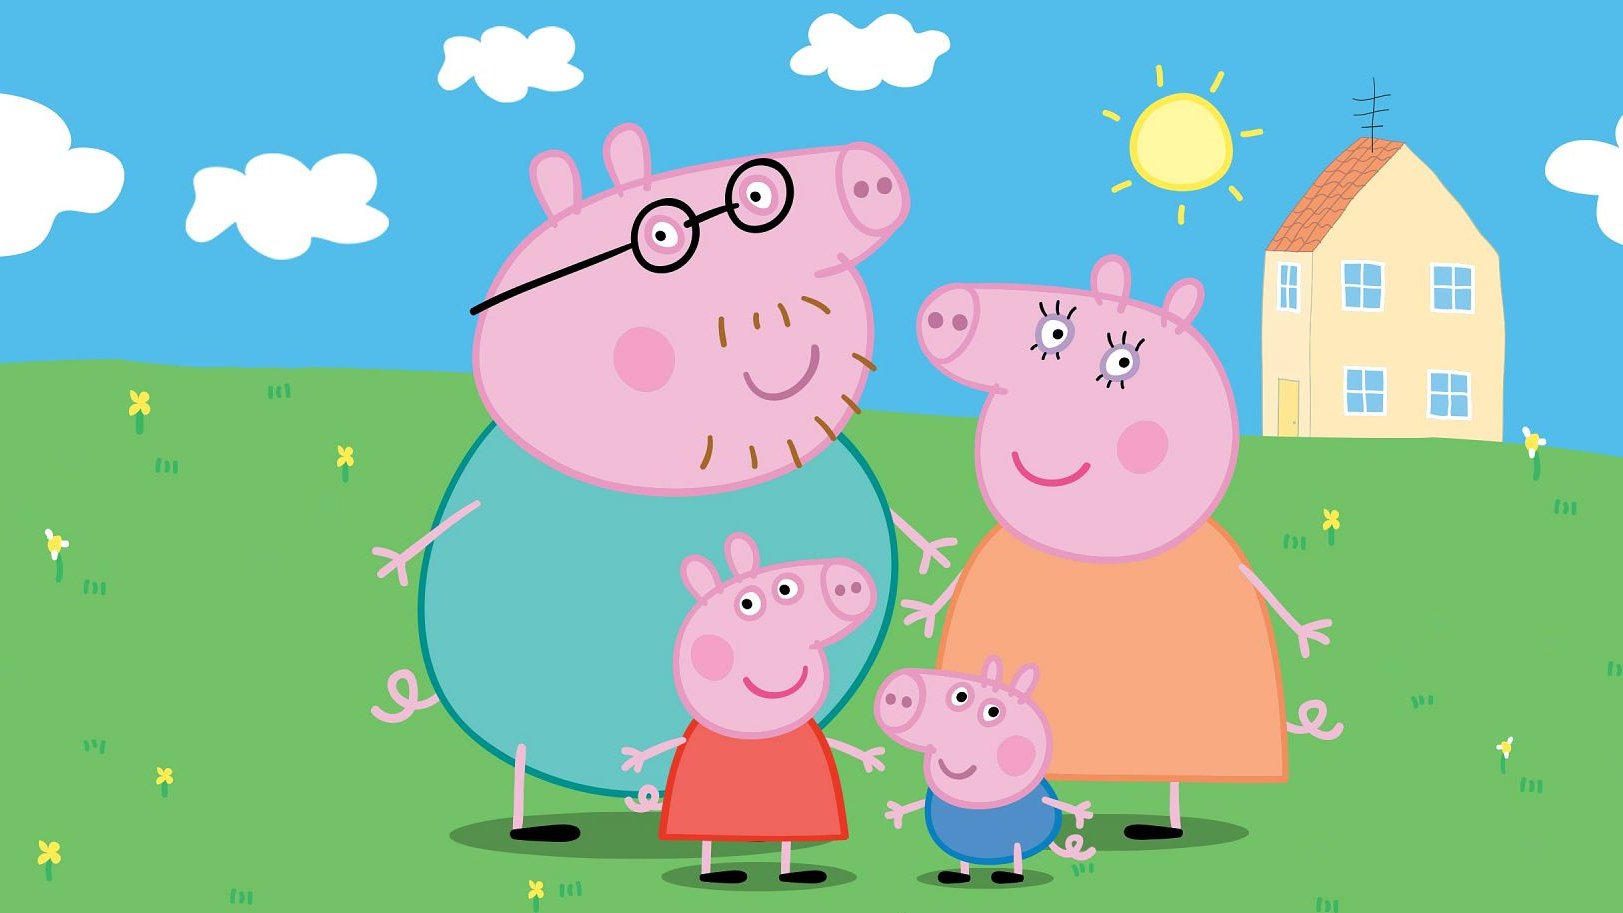 Cartoon Base - 'PEPPA PIG' is now streaming on Disney+ in 19 countries